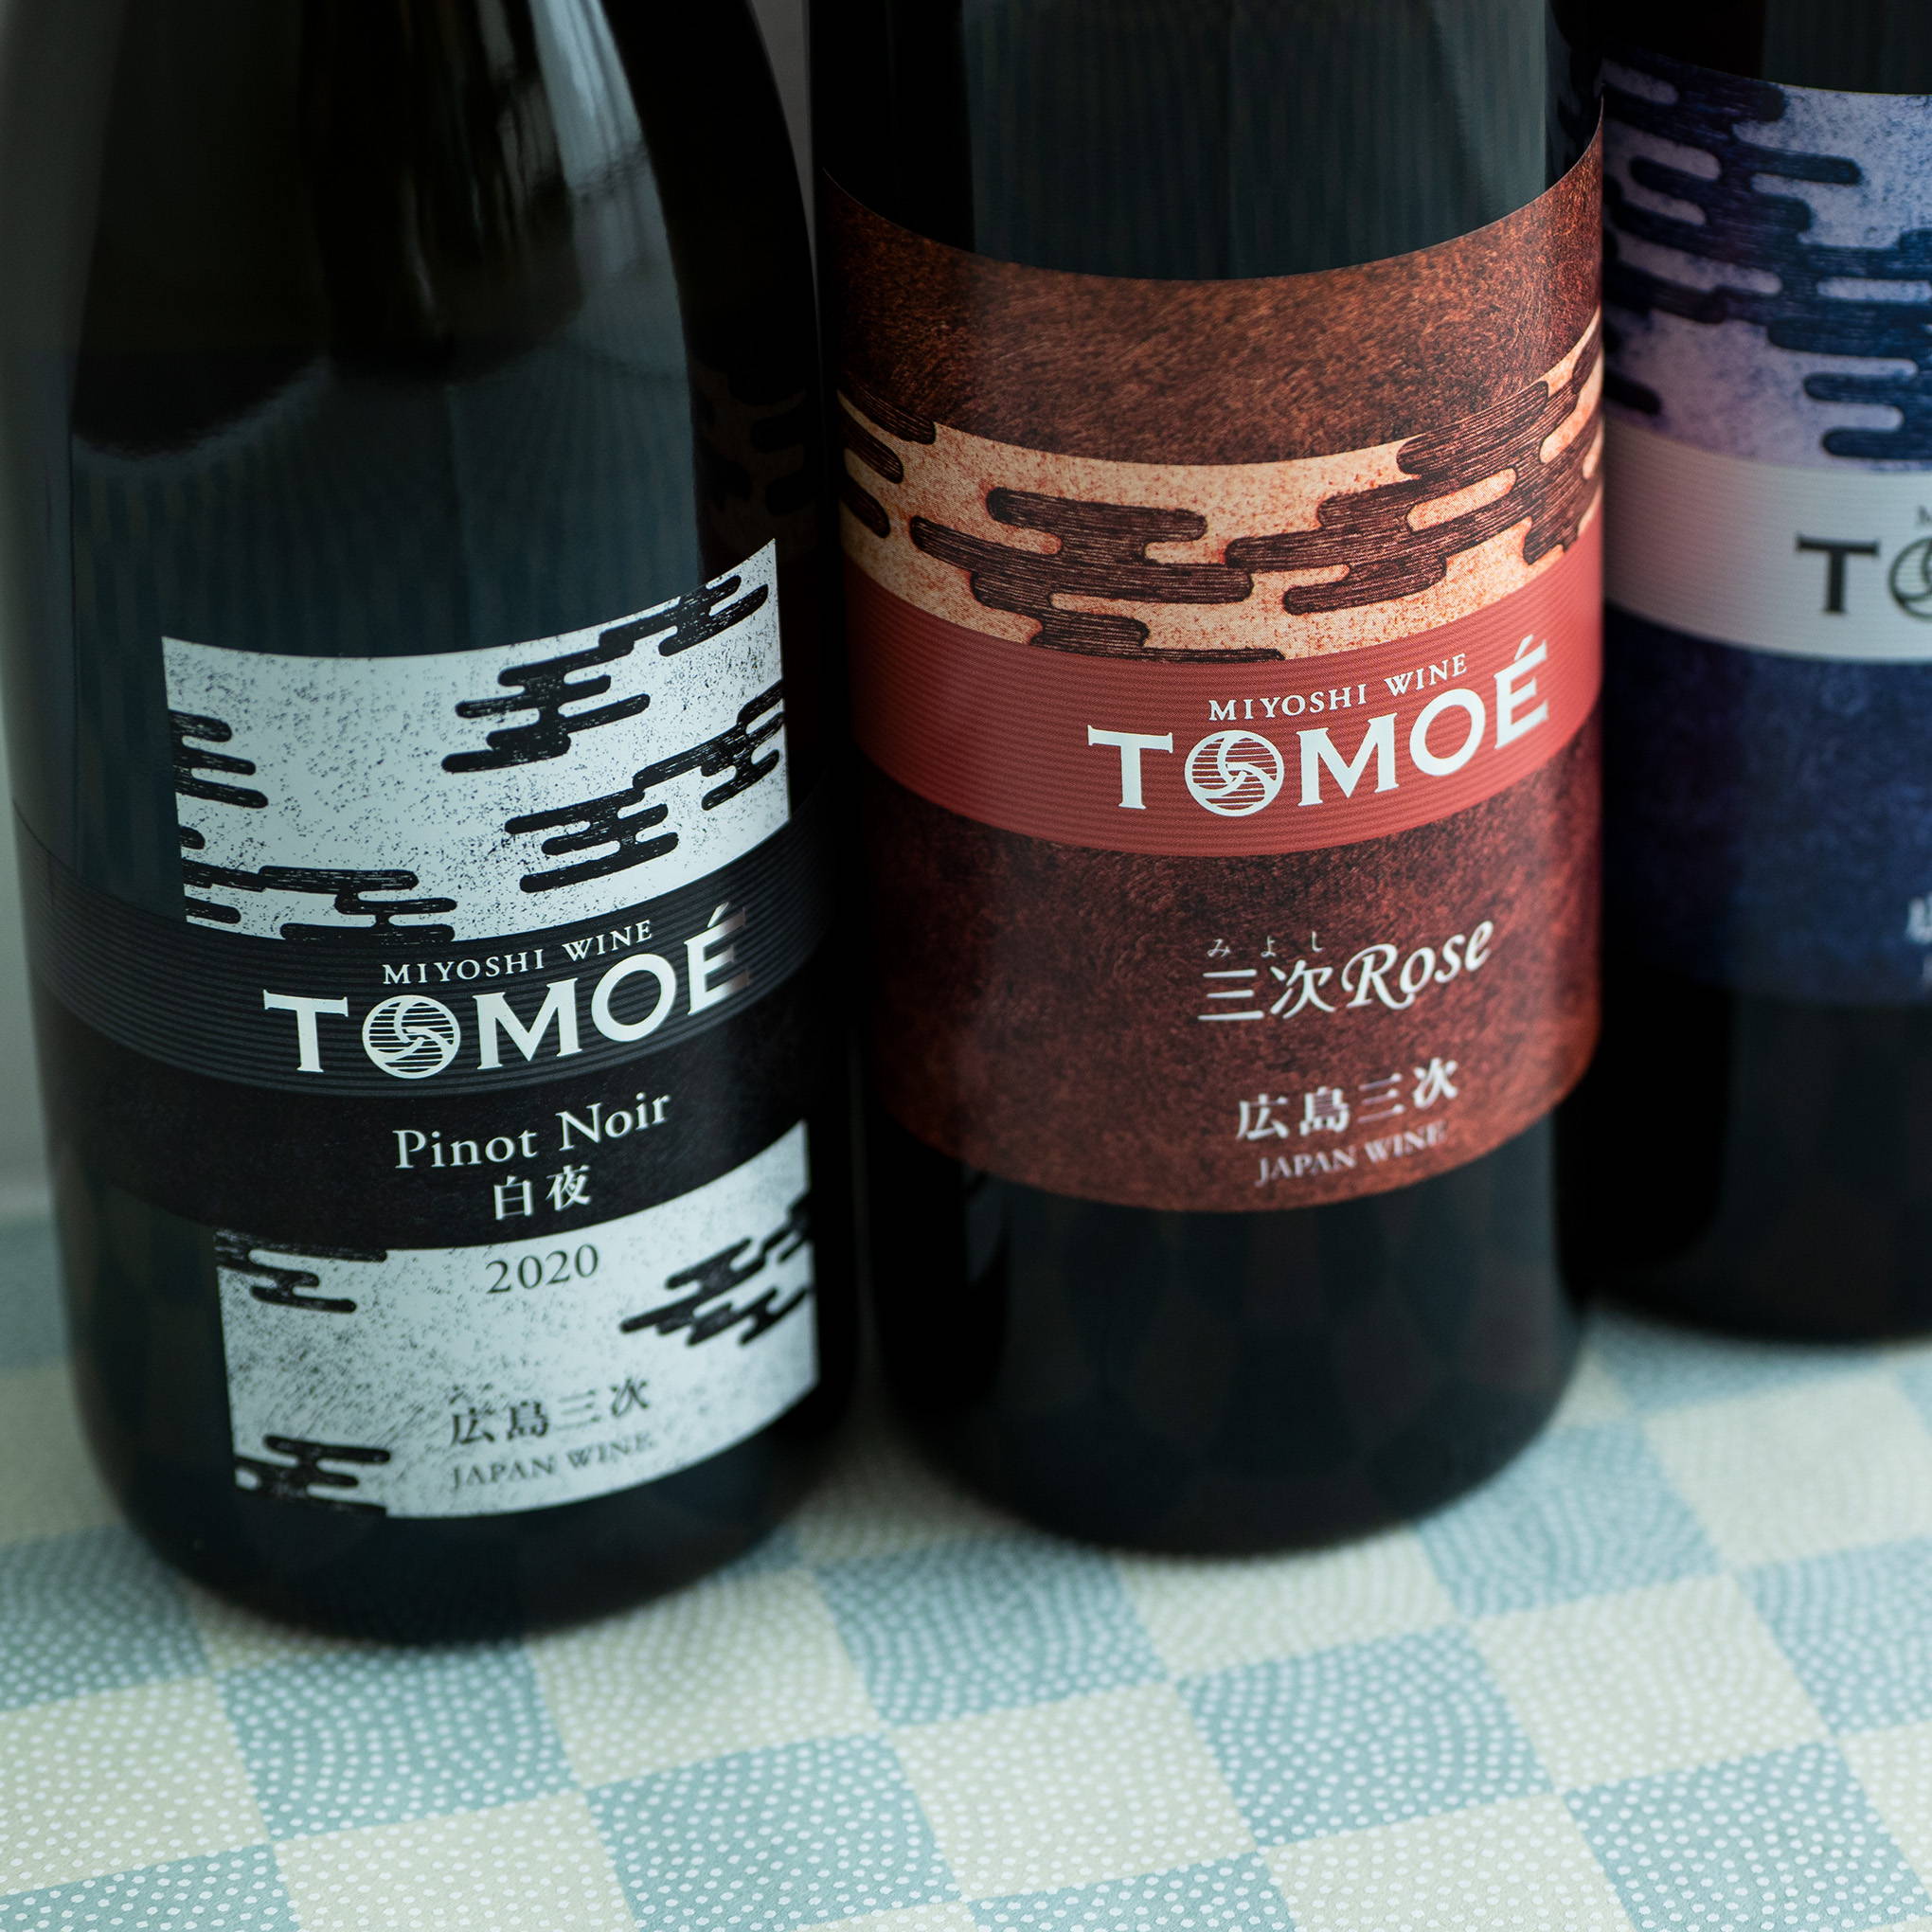 『TOMOÉ』ブランドからwa-syuがセレクト。ピノ・ノワールの白ワインなど、超人気の希少銘柄も入荷！